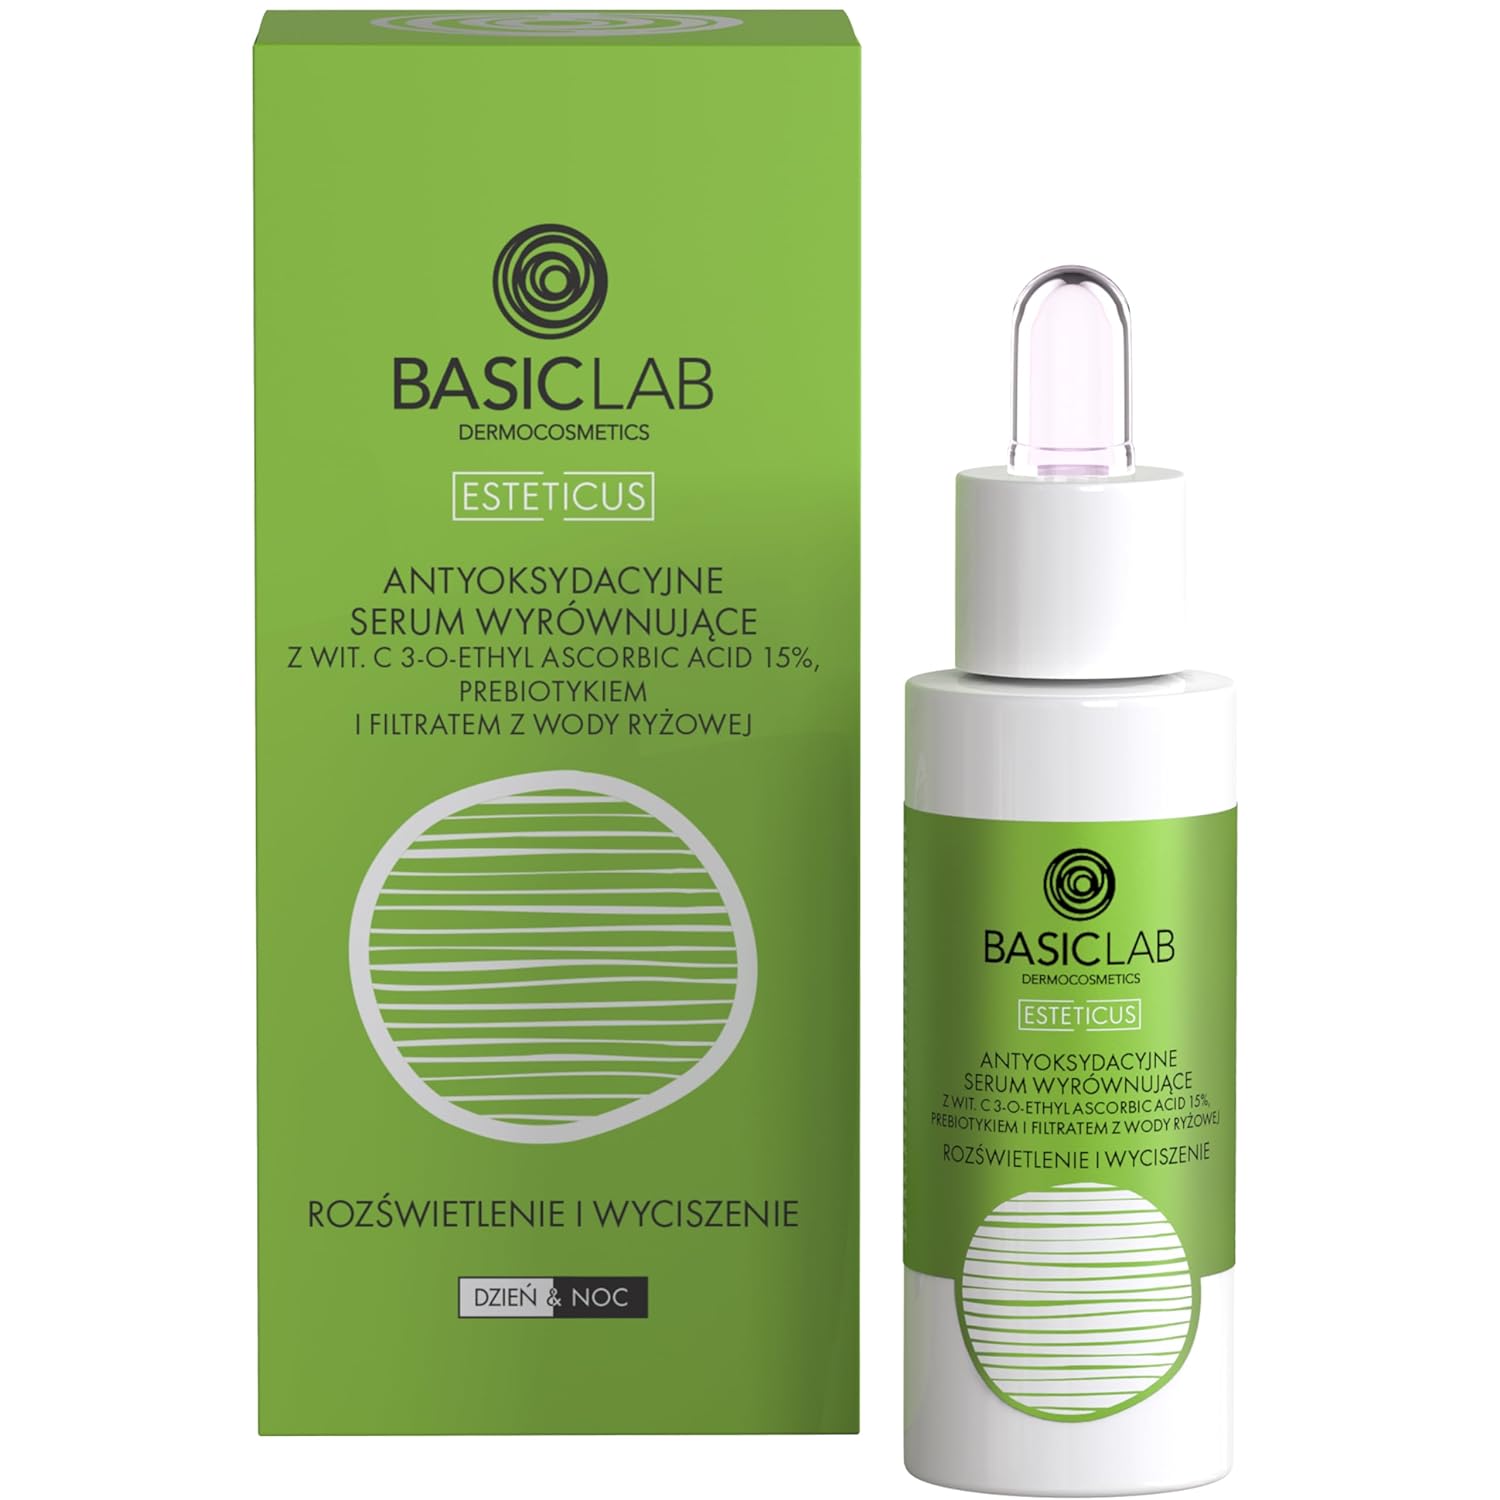 Basiclab Antioxidant regenerating serum with 15% vitamin C 3-O ethyl ascorbic acid, prebioric & rice water filtrate. Brightening and calming 30 ml